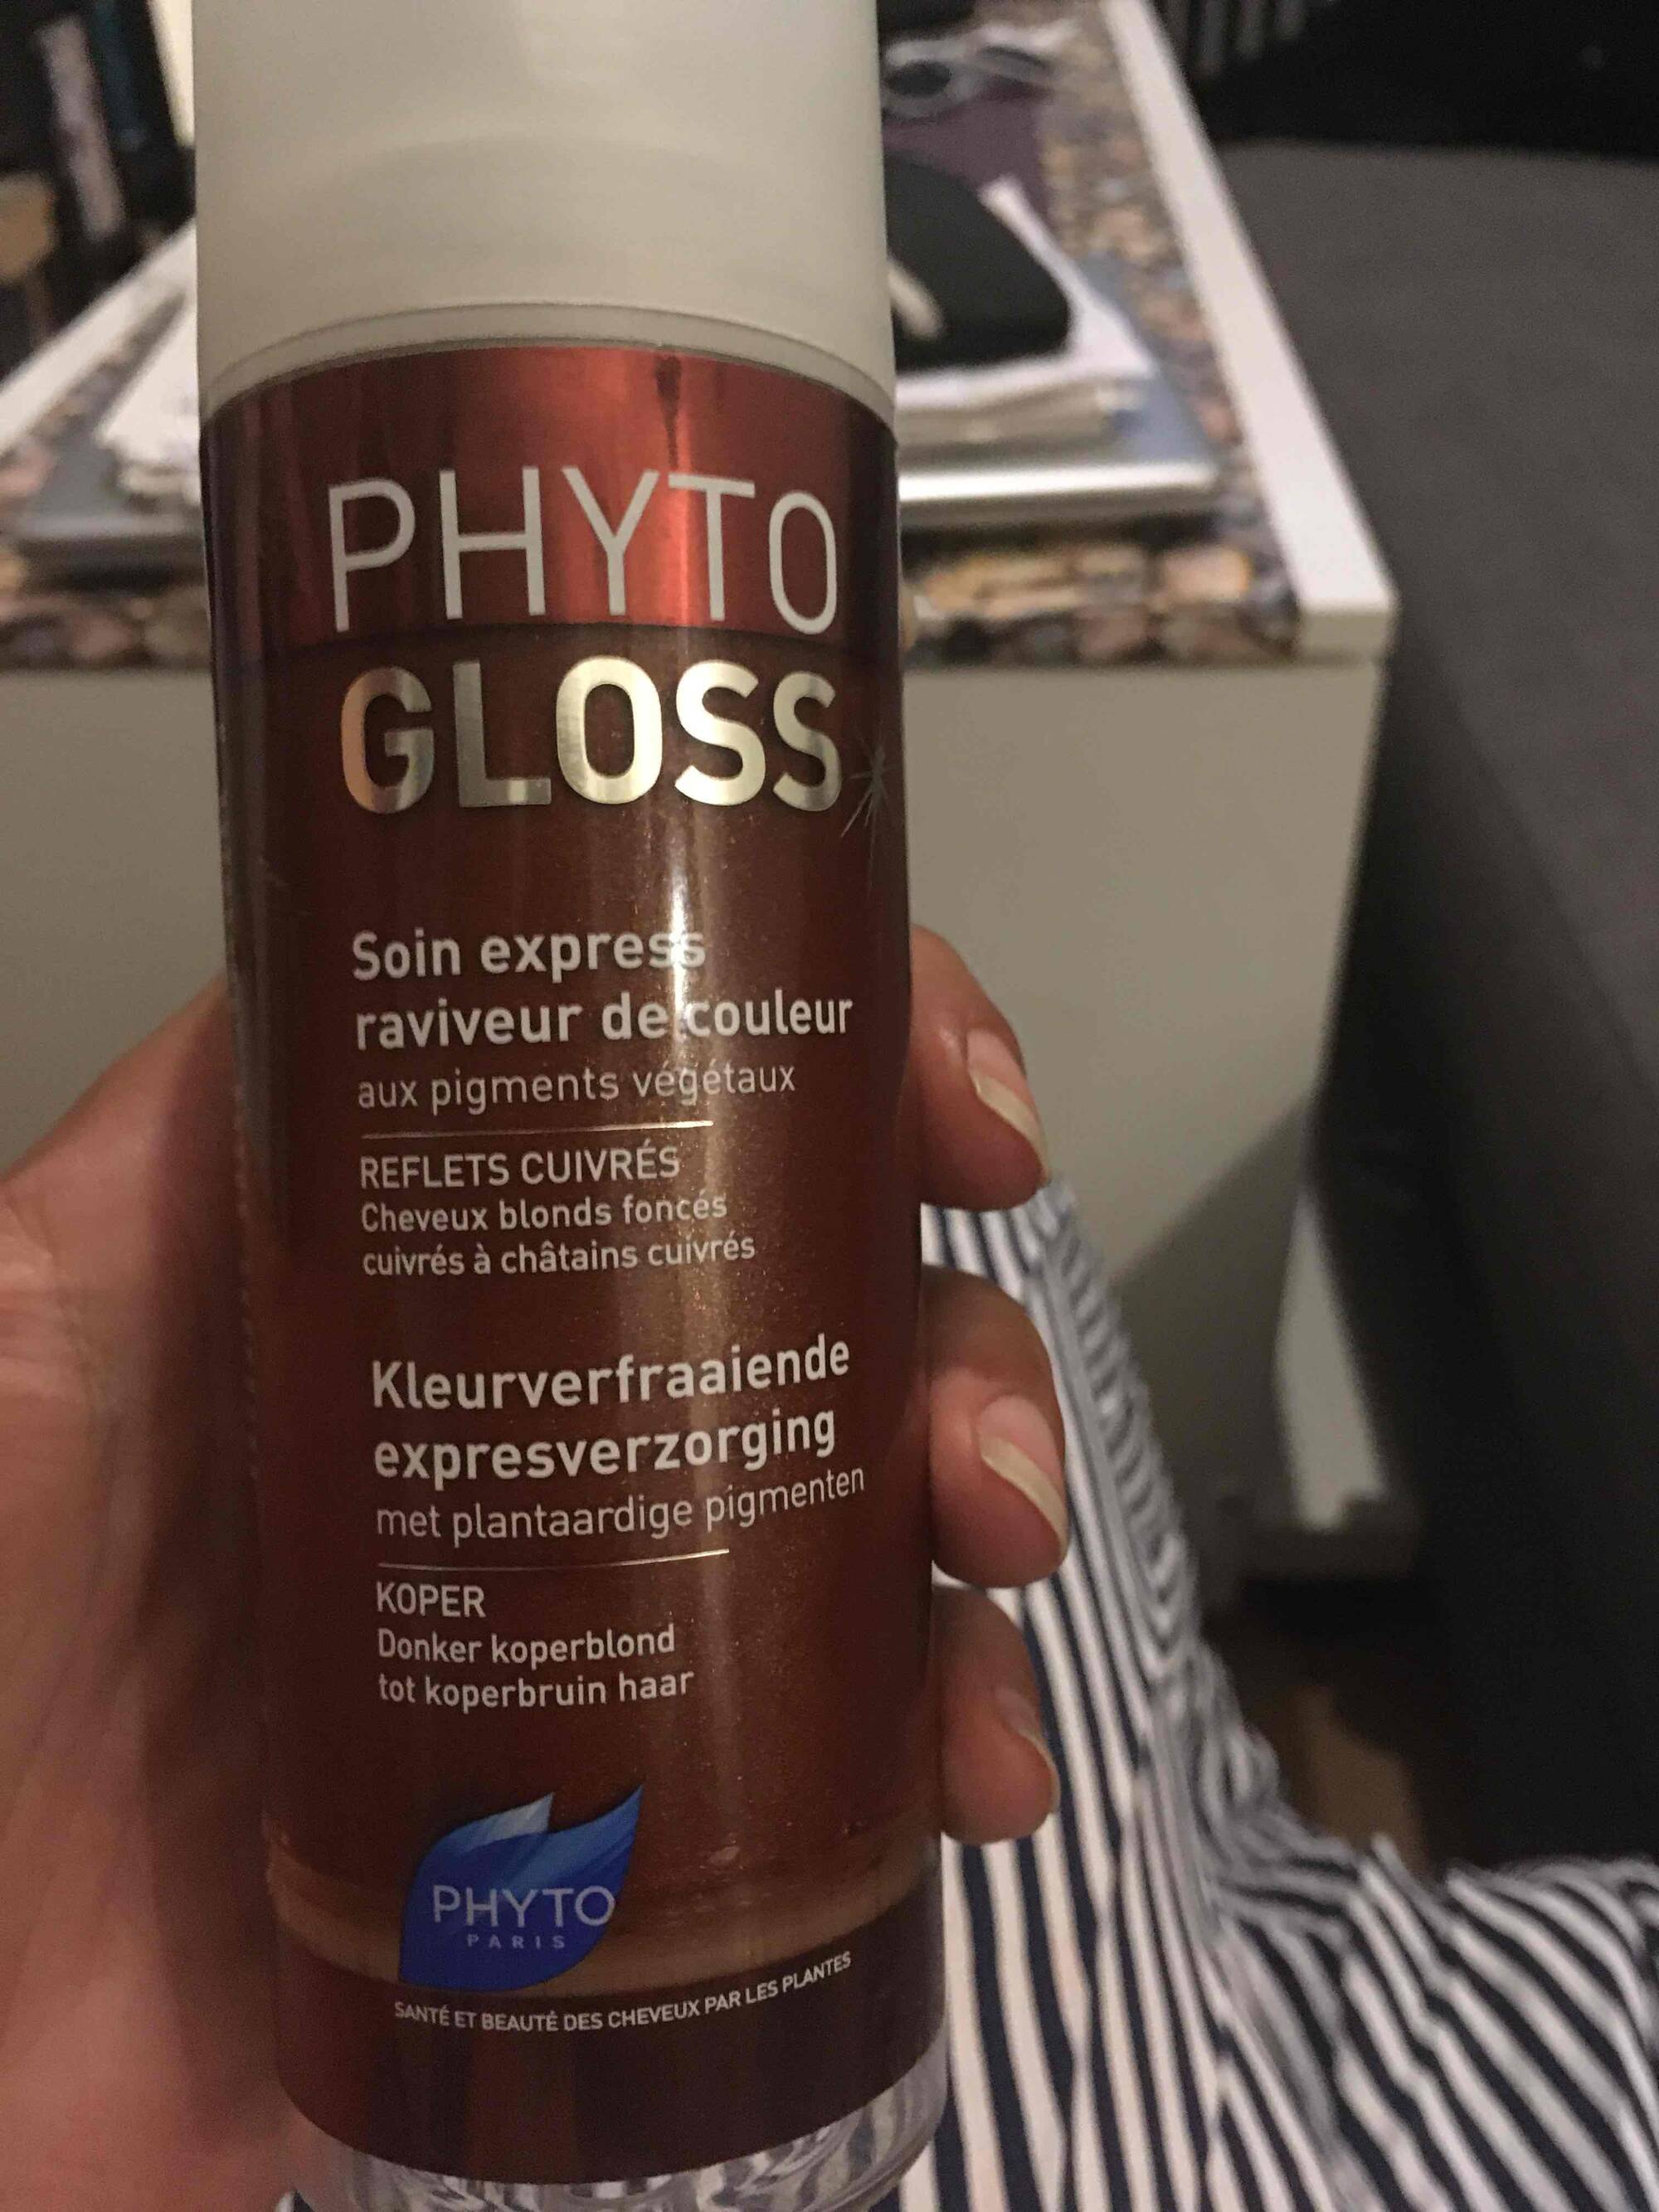 PHYTO - Phytogloss - Soins express raviveur de couleur 